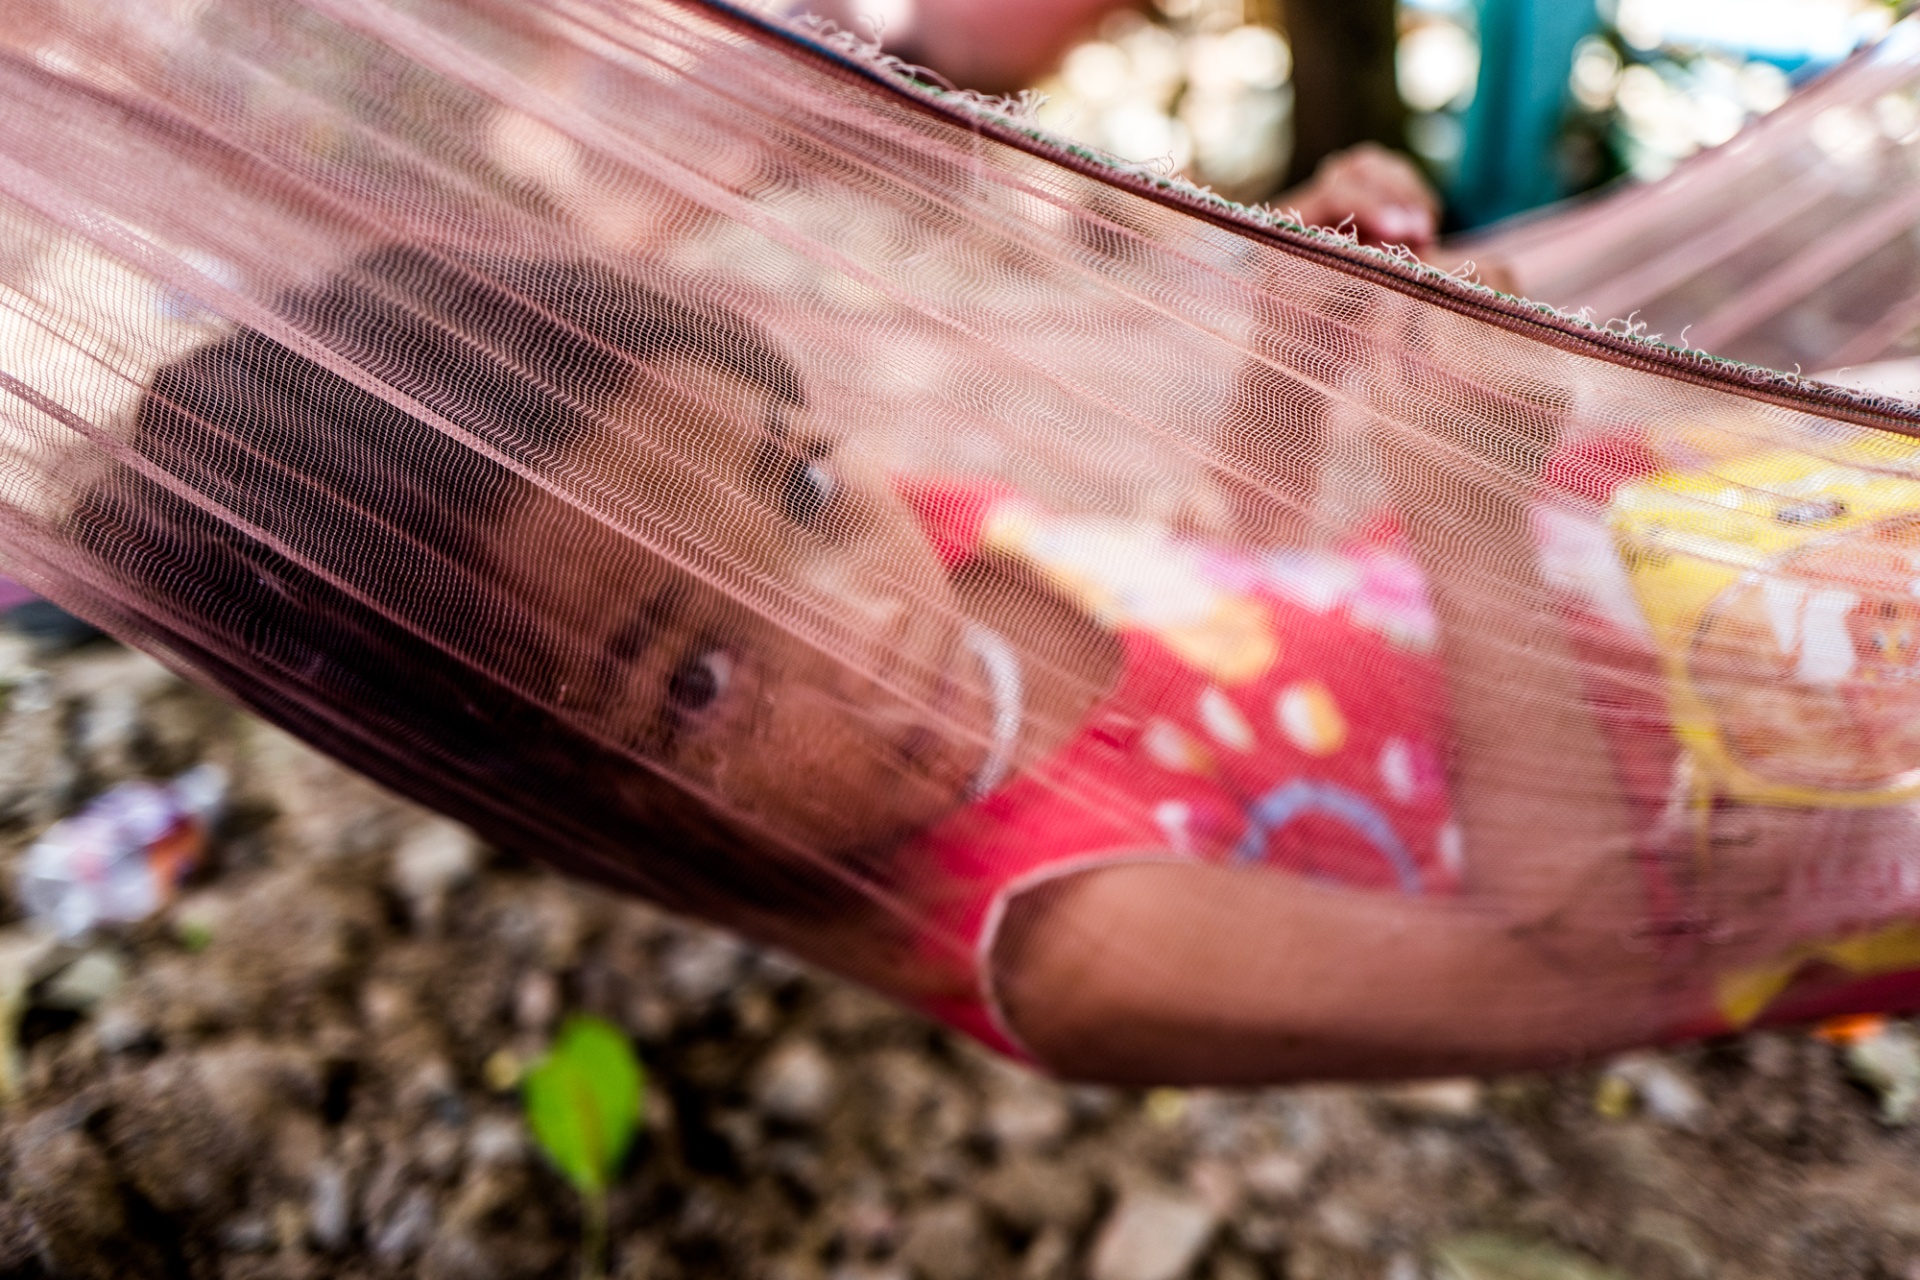 Cambodian children portraits, 